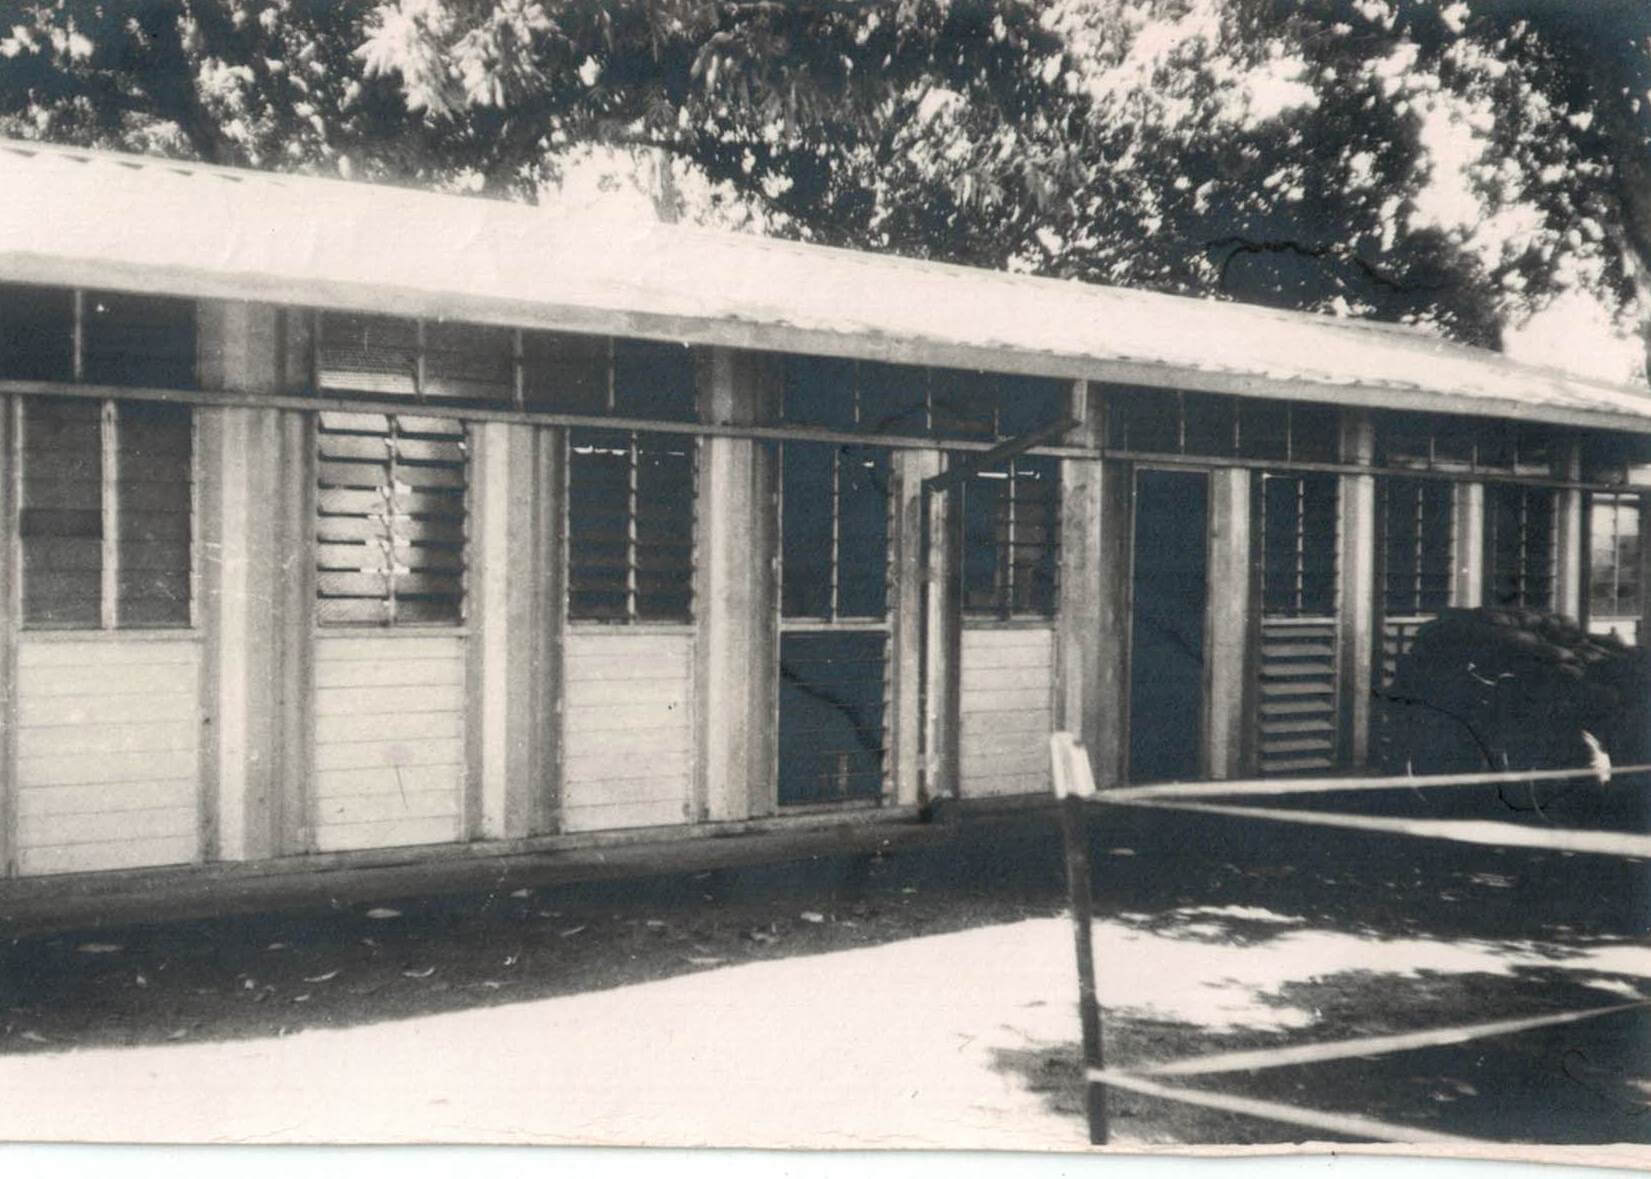 HQ building of 1 FD SQN GP circa 1969.